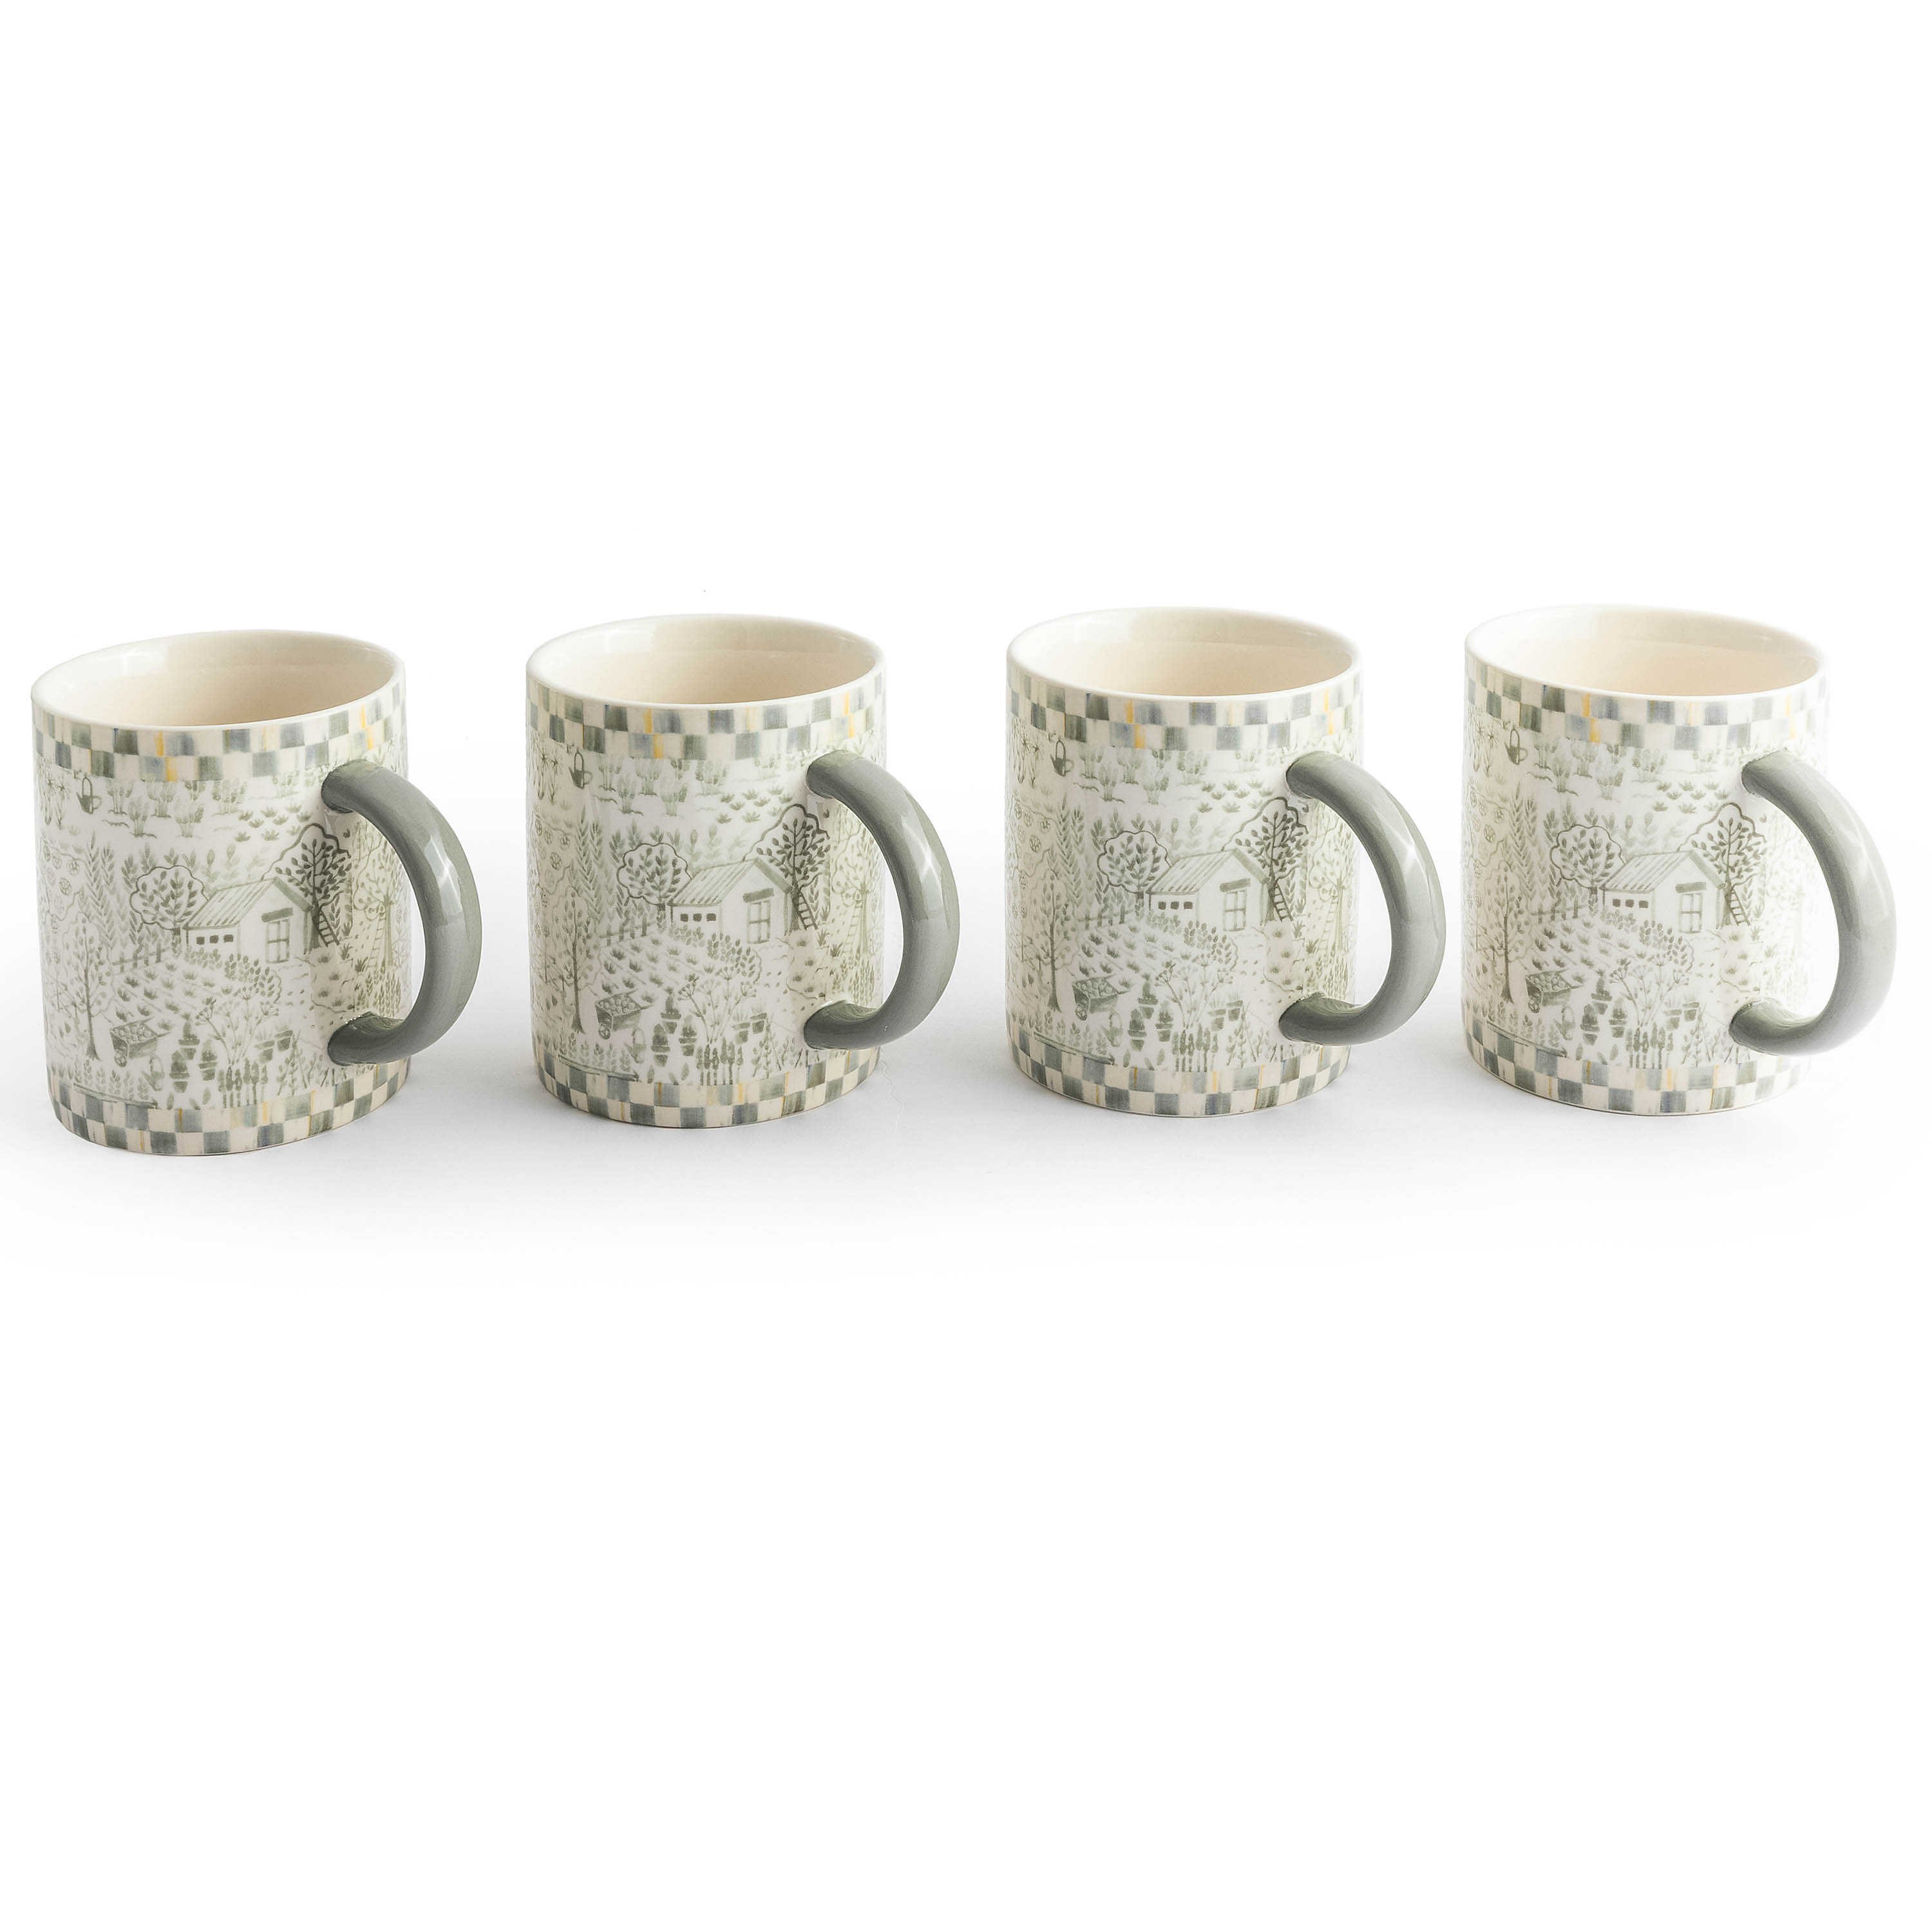 Sterling Cottage Mugs, Set of 4 mackenzie-childs Panama 0